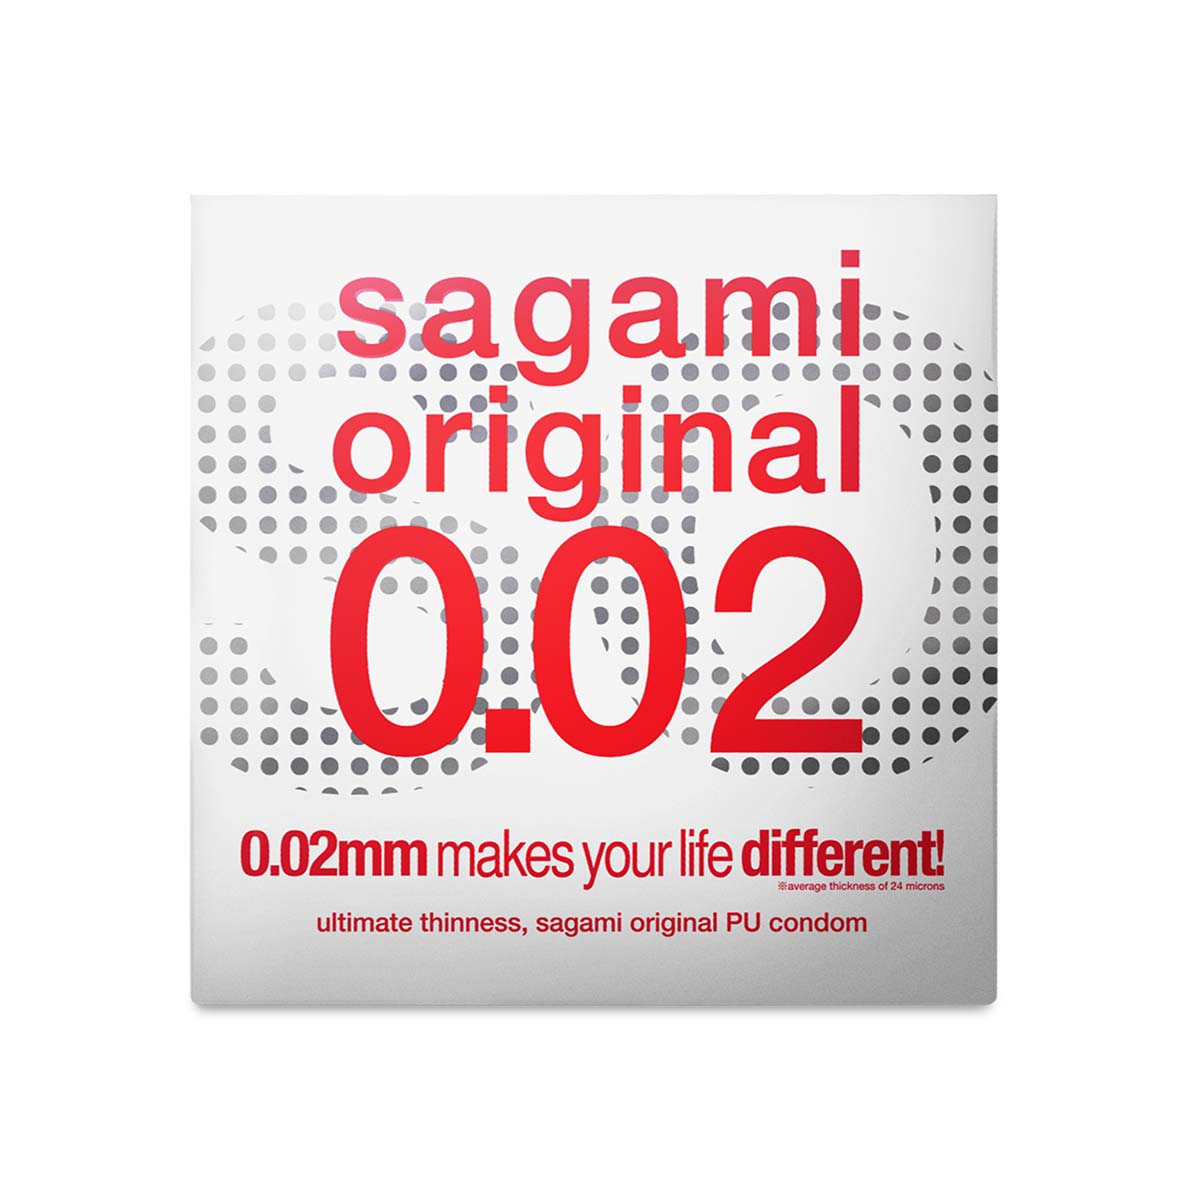 Sagami Original 0.02 1s